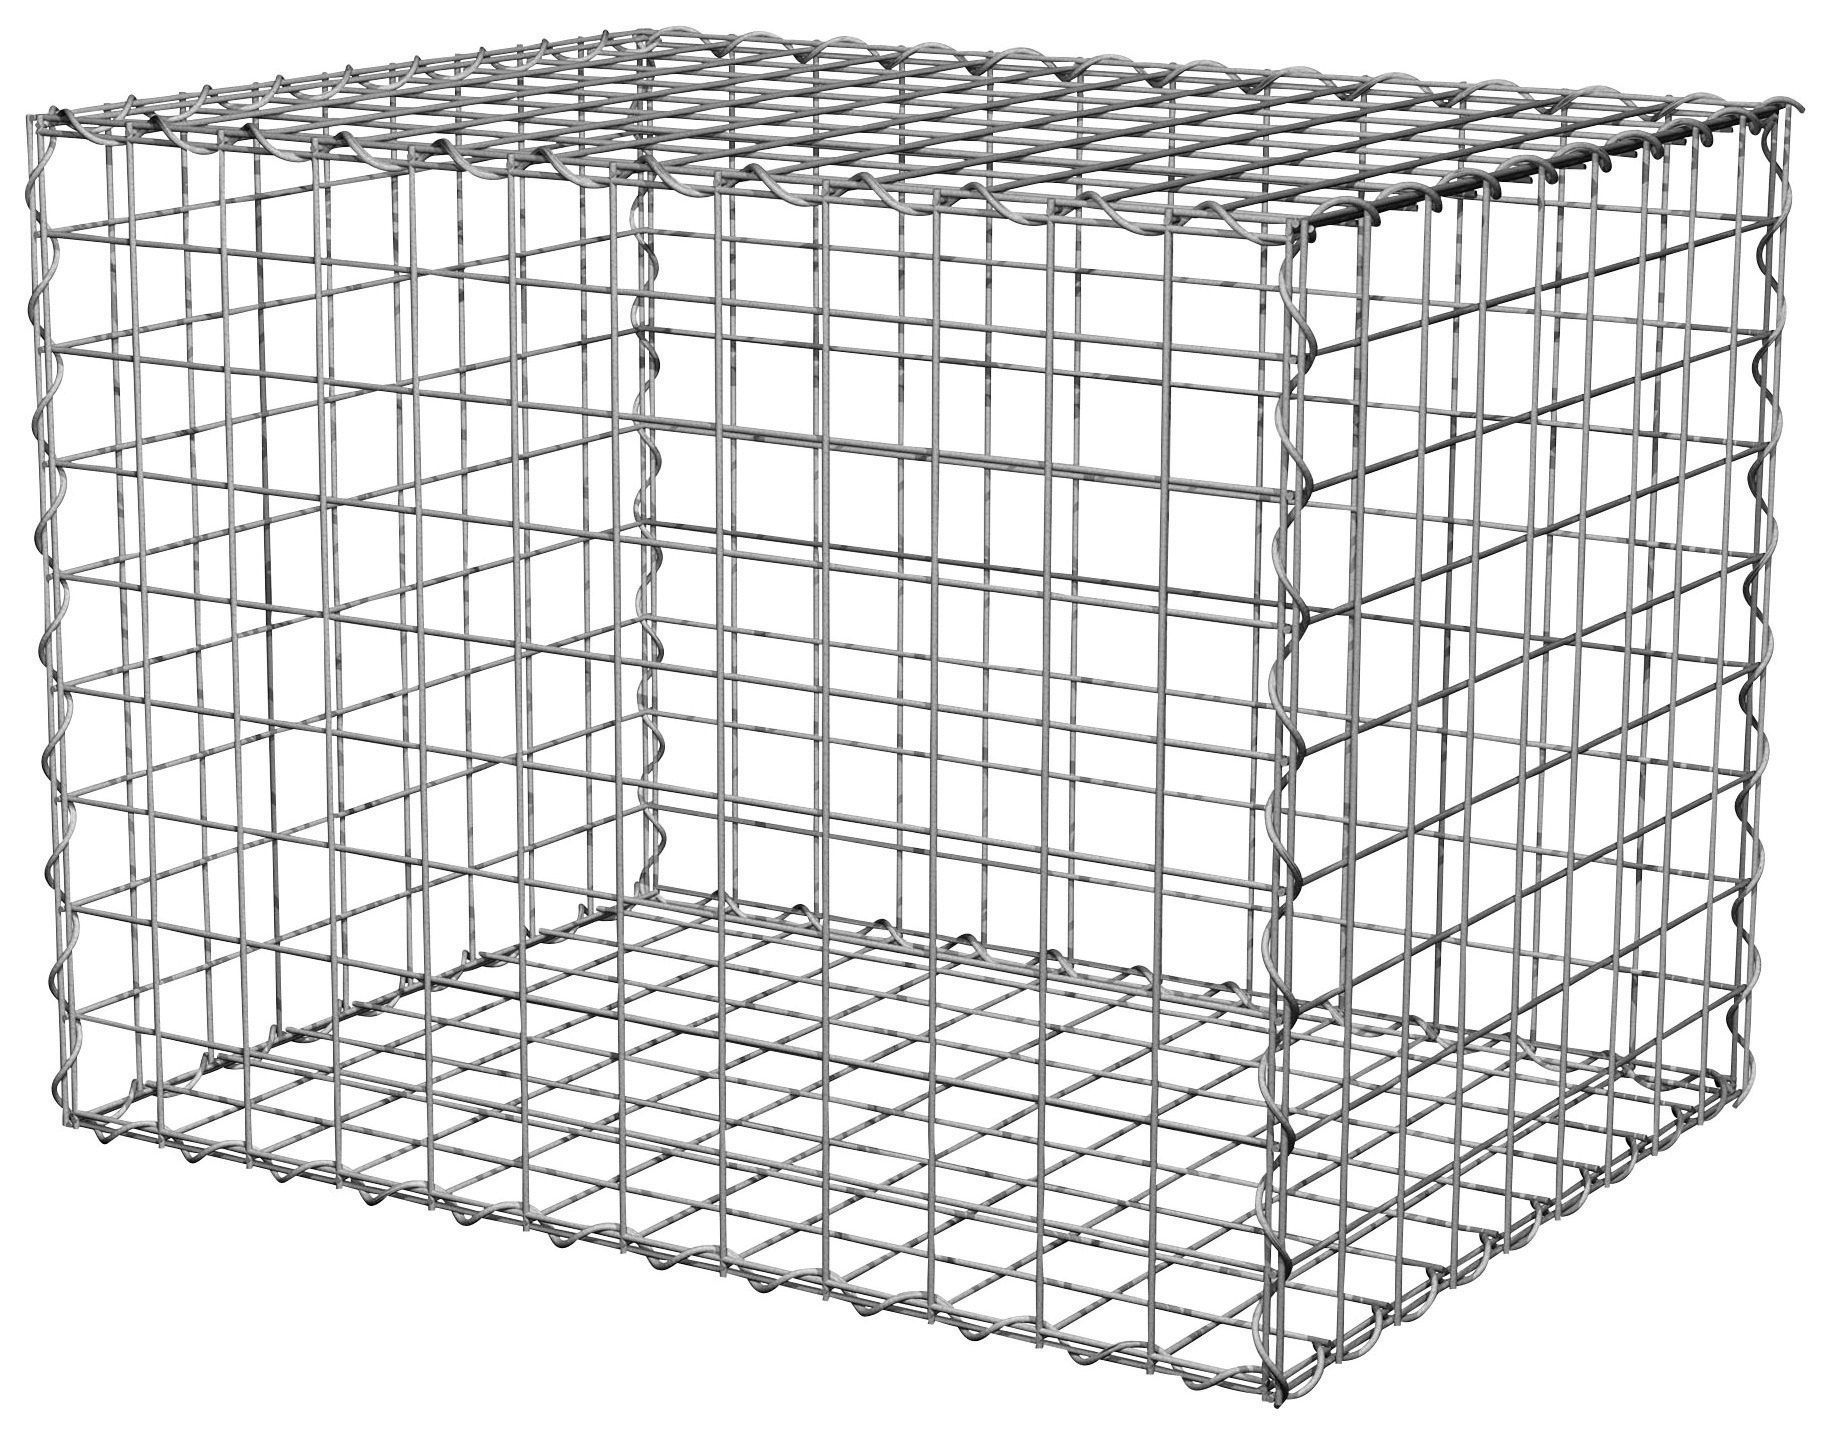 Landscape Gabion Wire Cage - 450 x 450 x 600mm